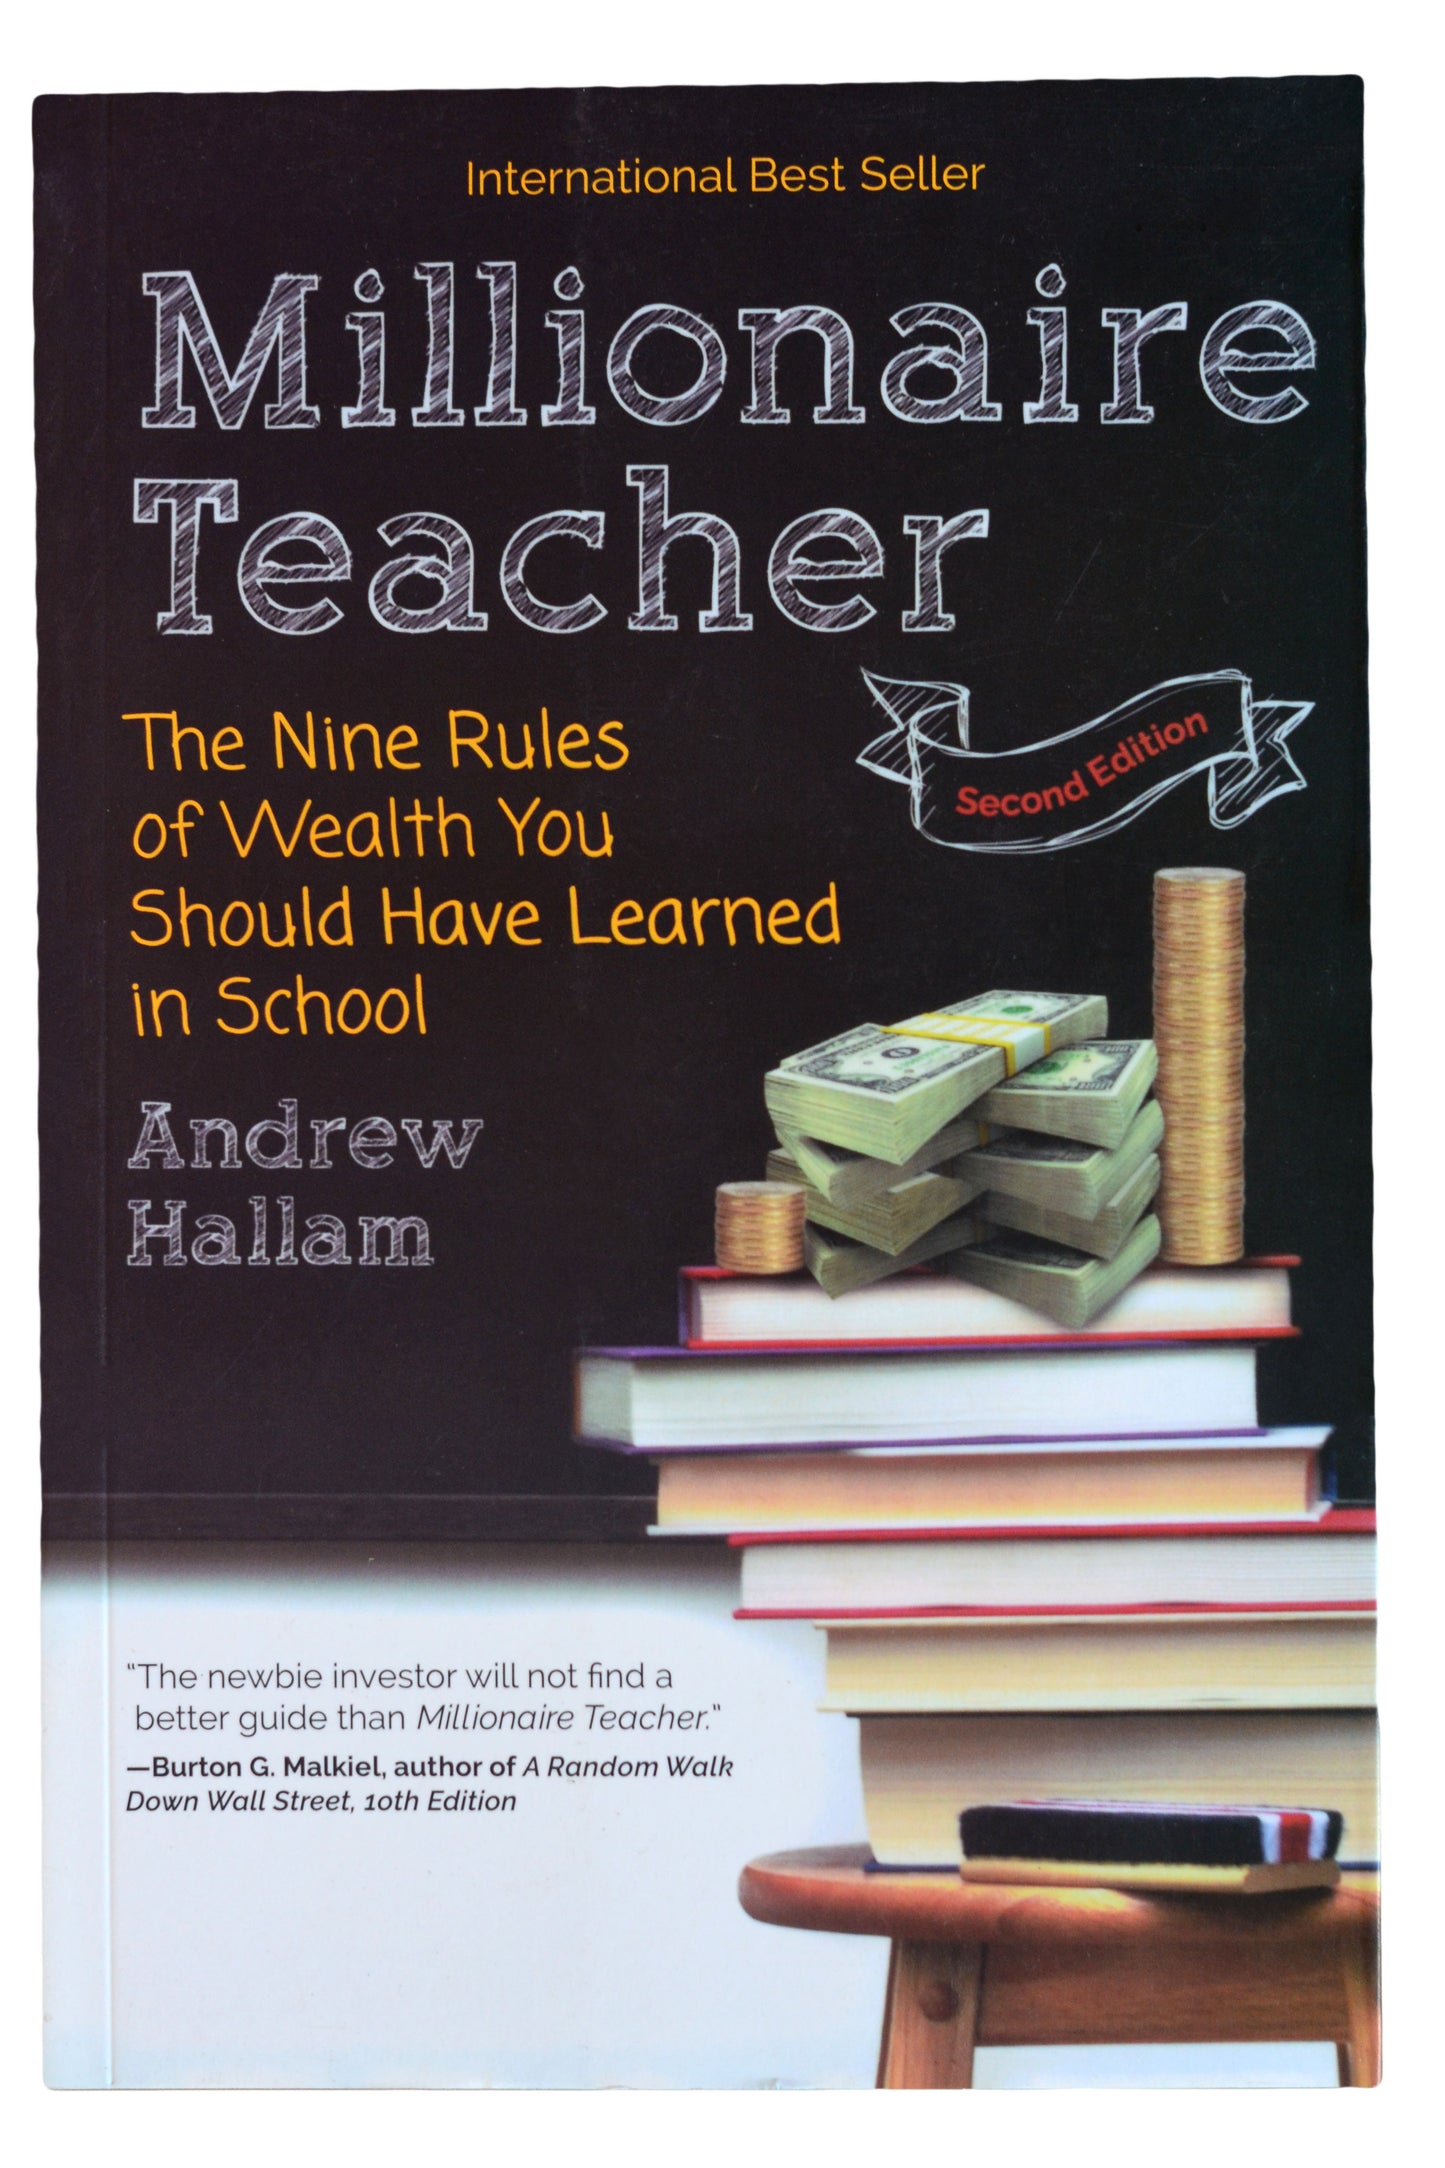 THE MILLIONAIRE TEACHER by Andrew Hallam